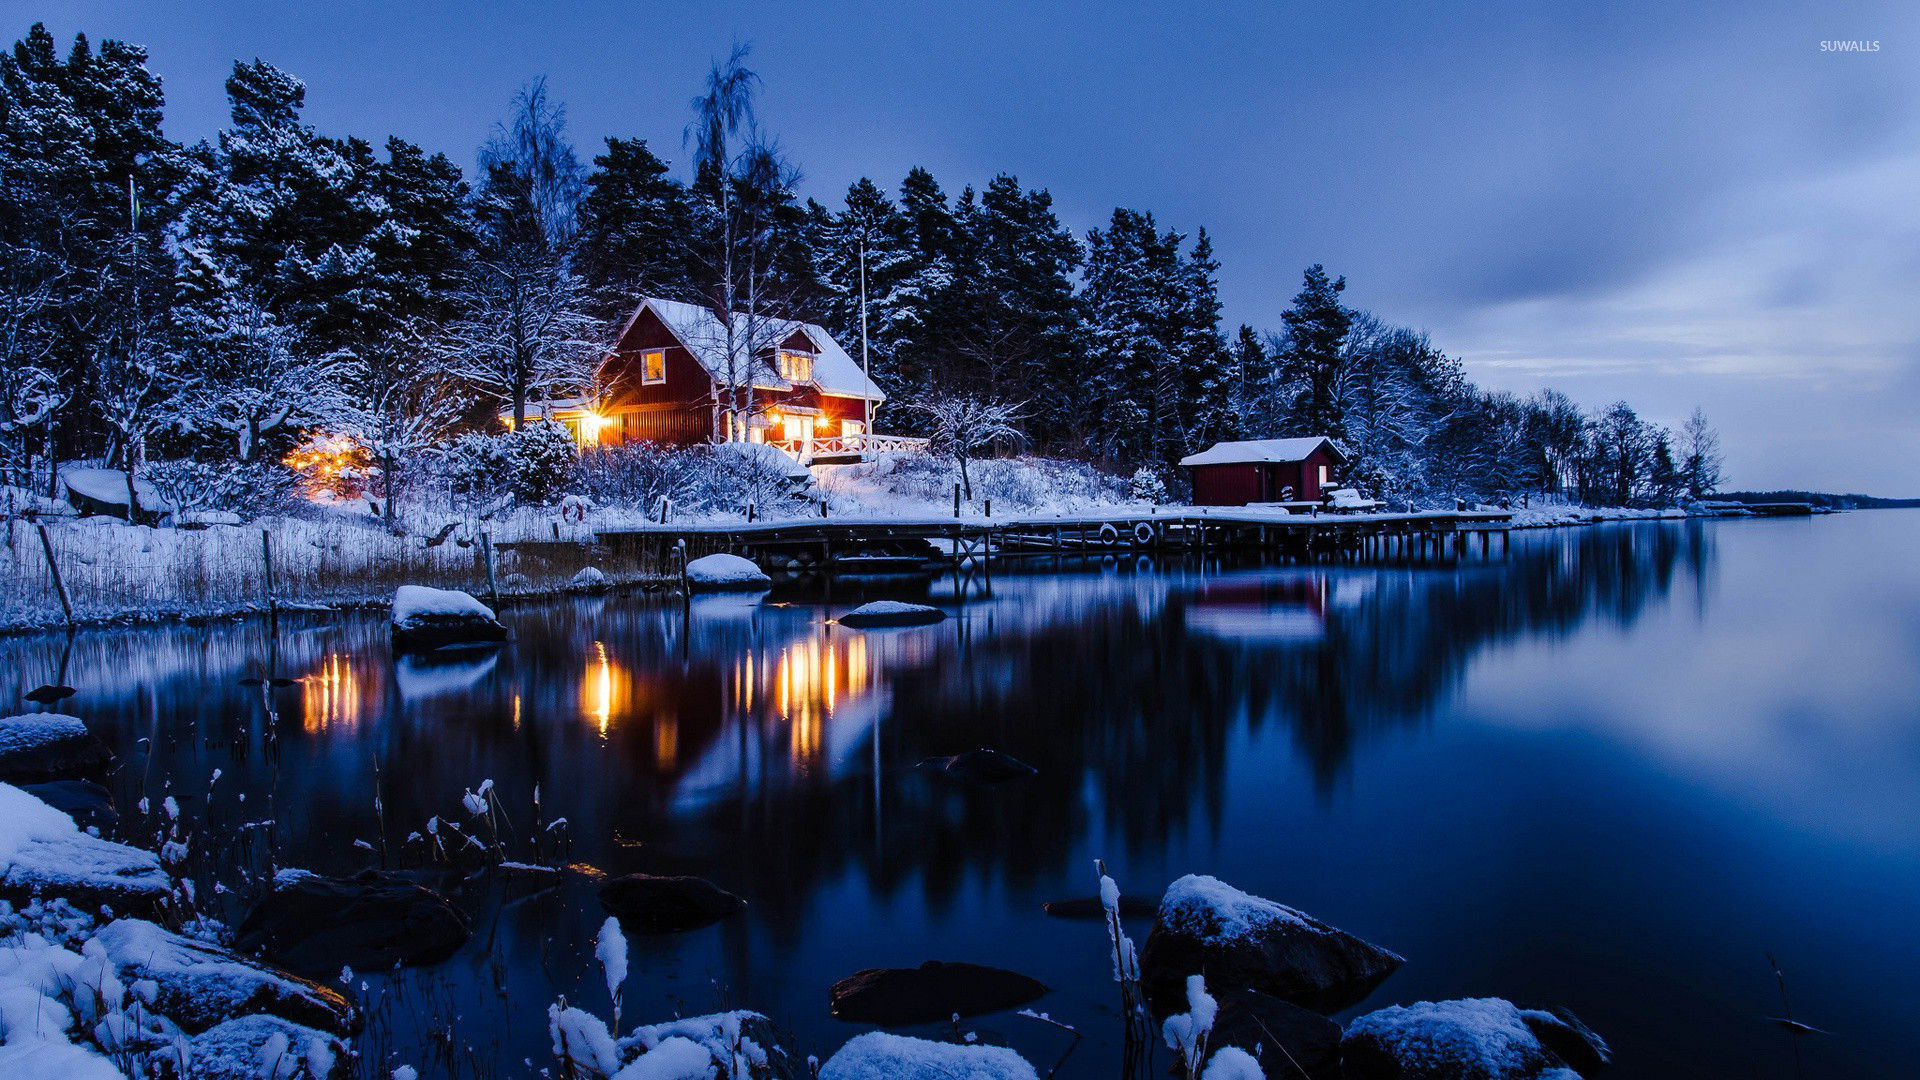 Lakeside winter cabin wallpaper jpg